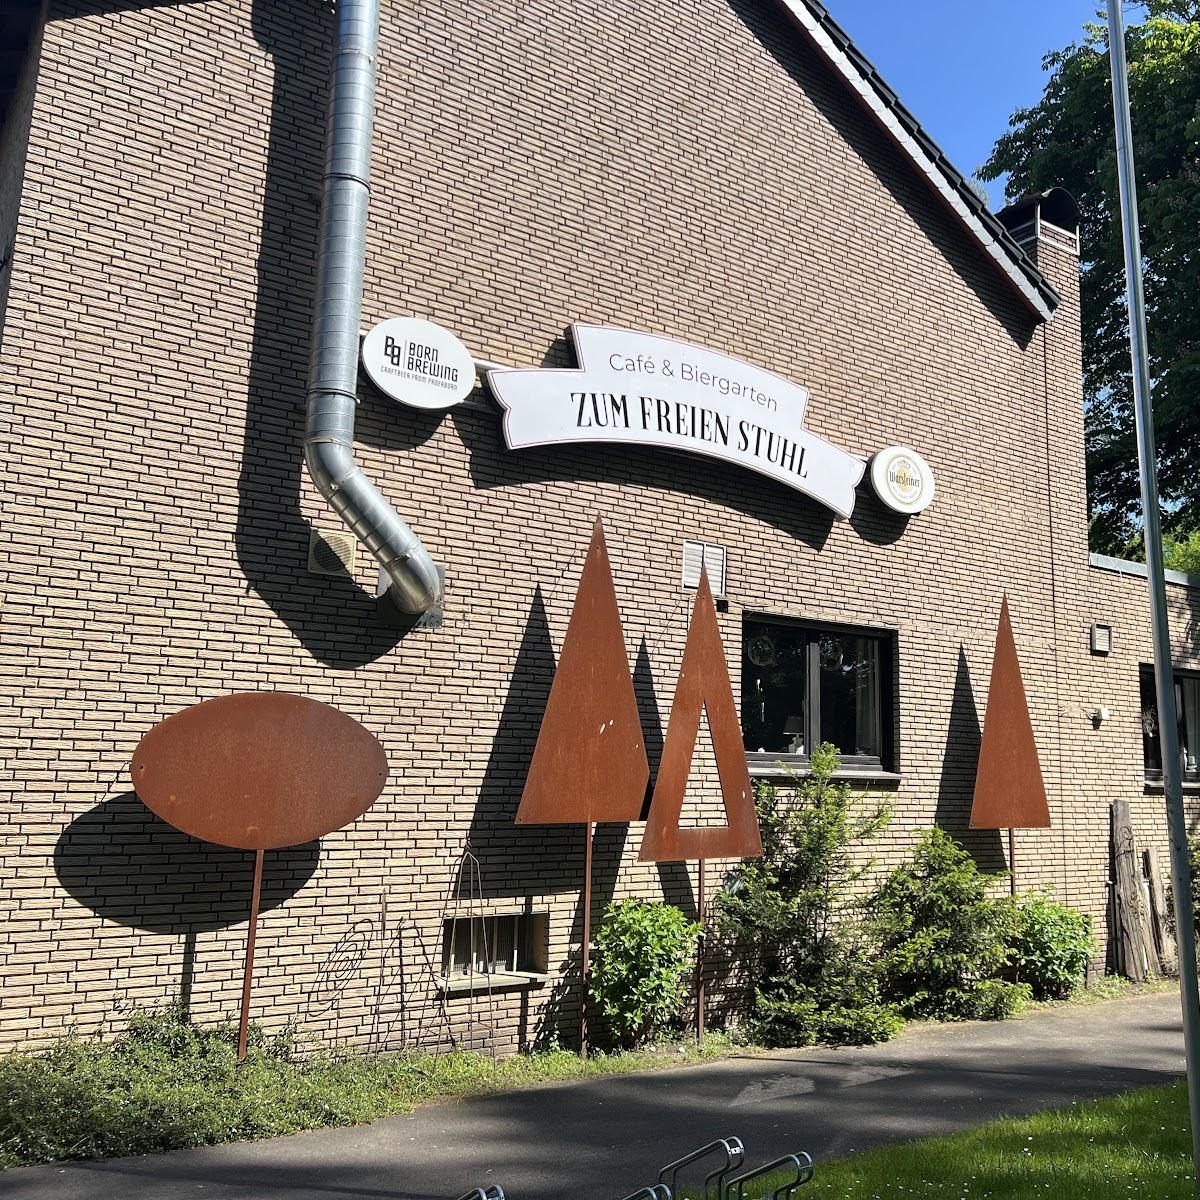 Restaurant "Restaurant zum freien Stuhl" in Delbrück